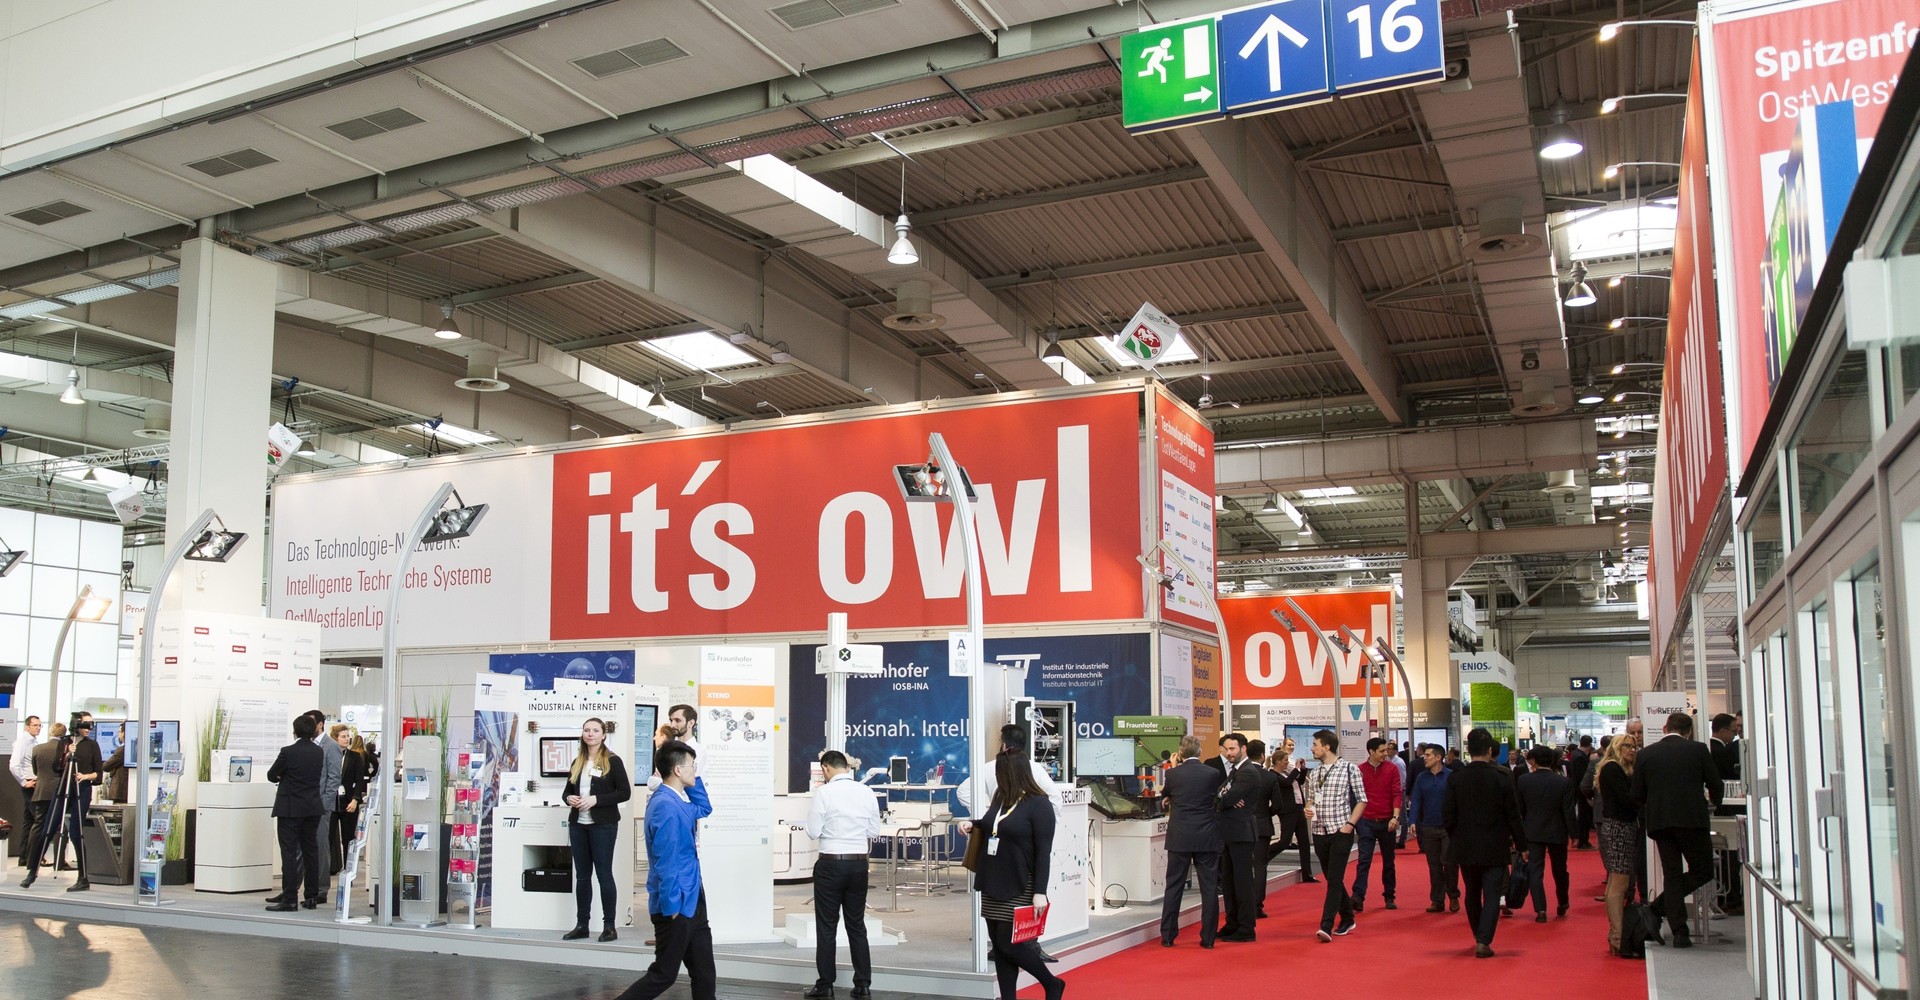 Stand des Technologieclusters "it's OWL" auf der Hannover Messe